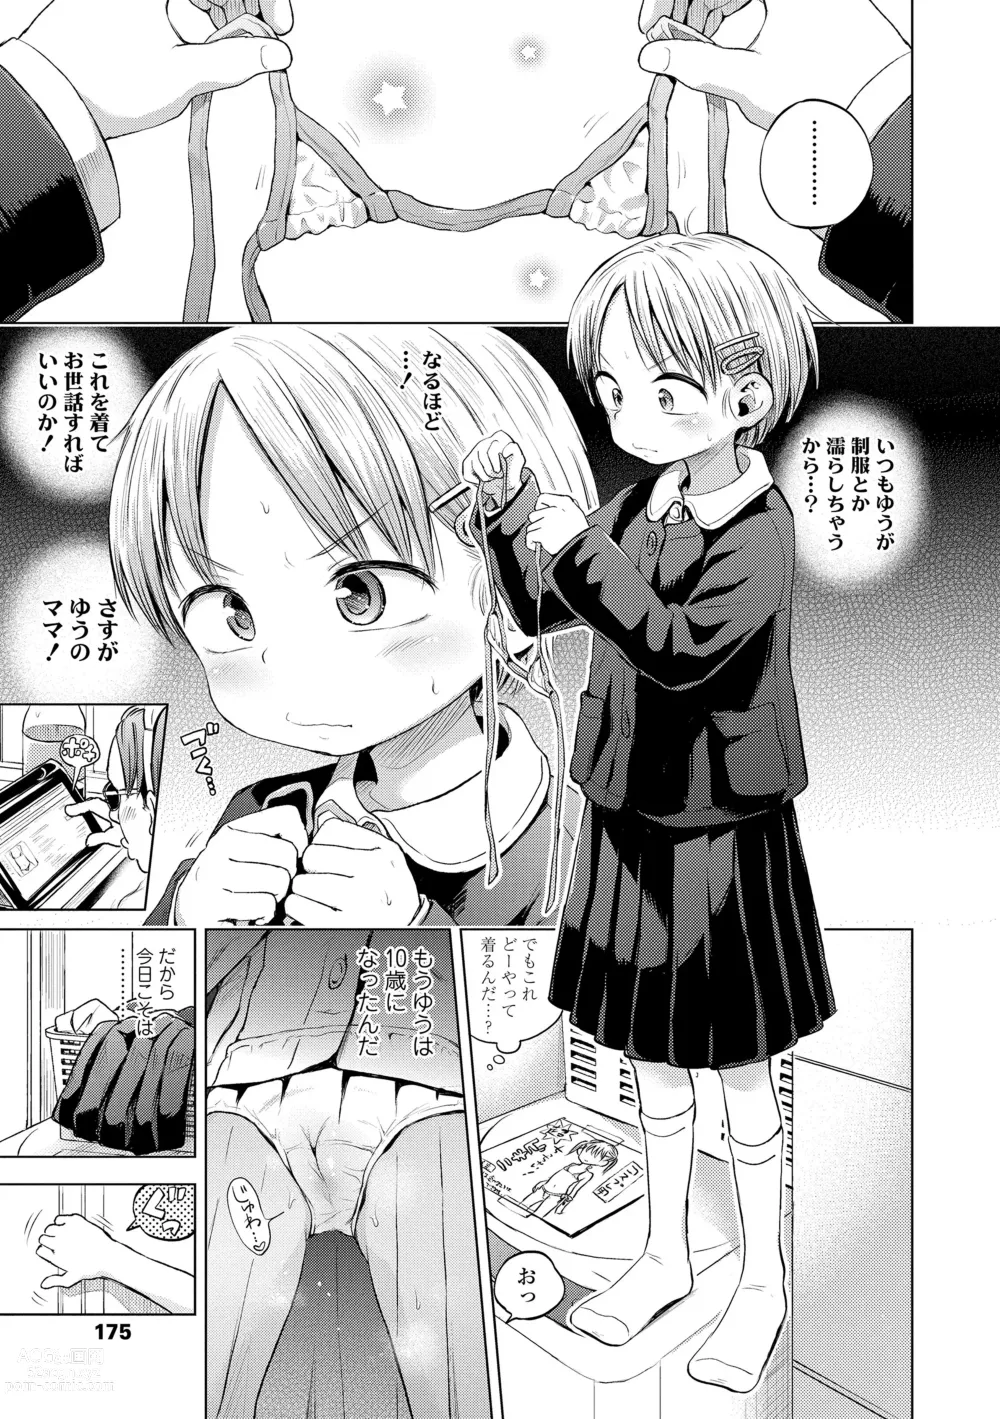 Page 175 of manga Puchi Love Kingdom